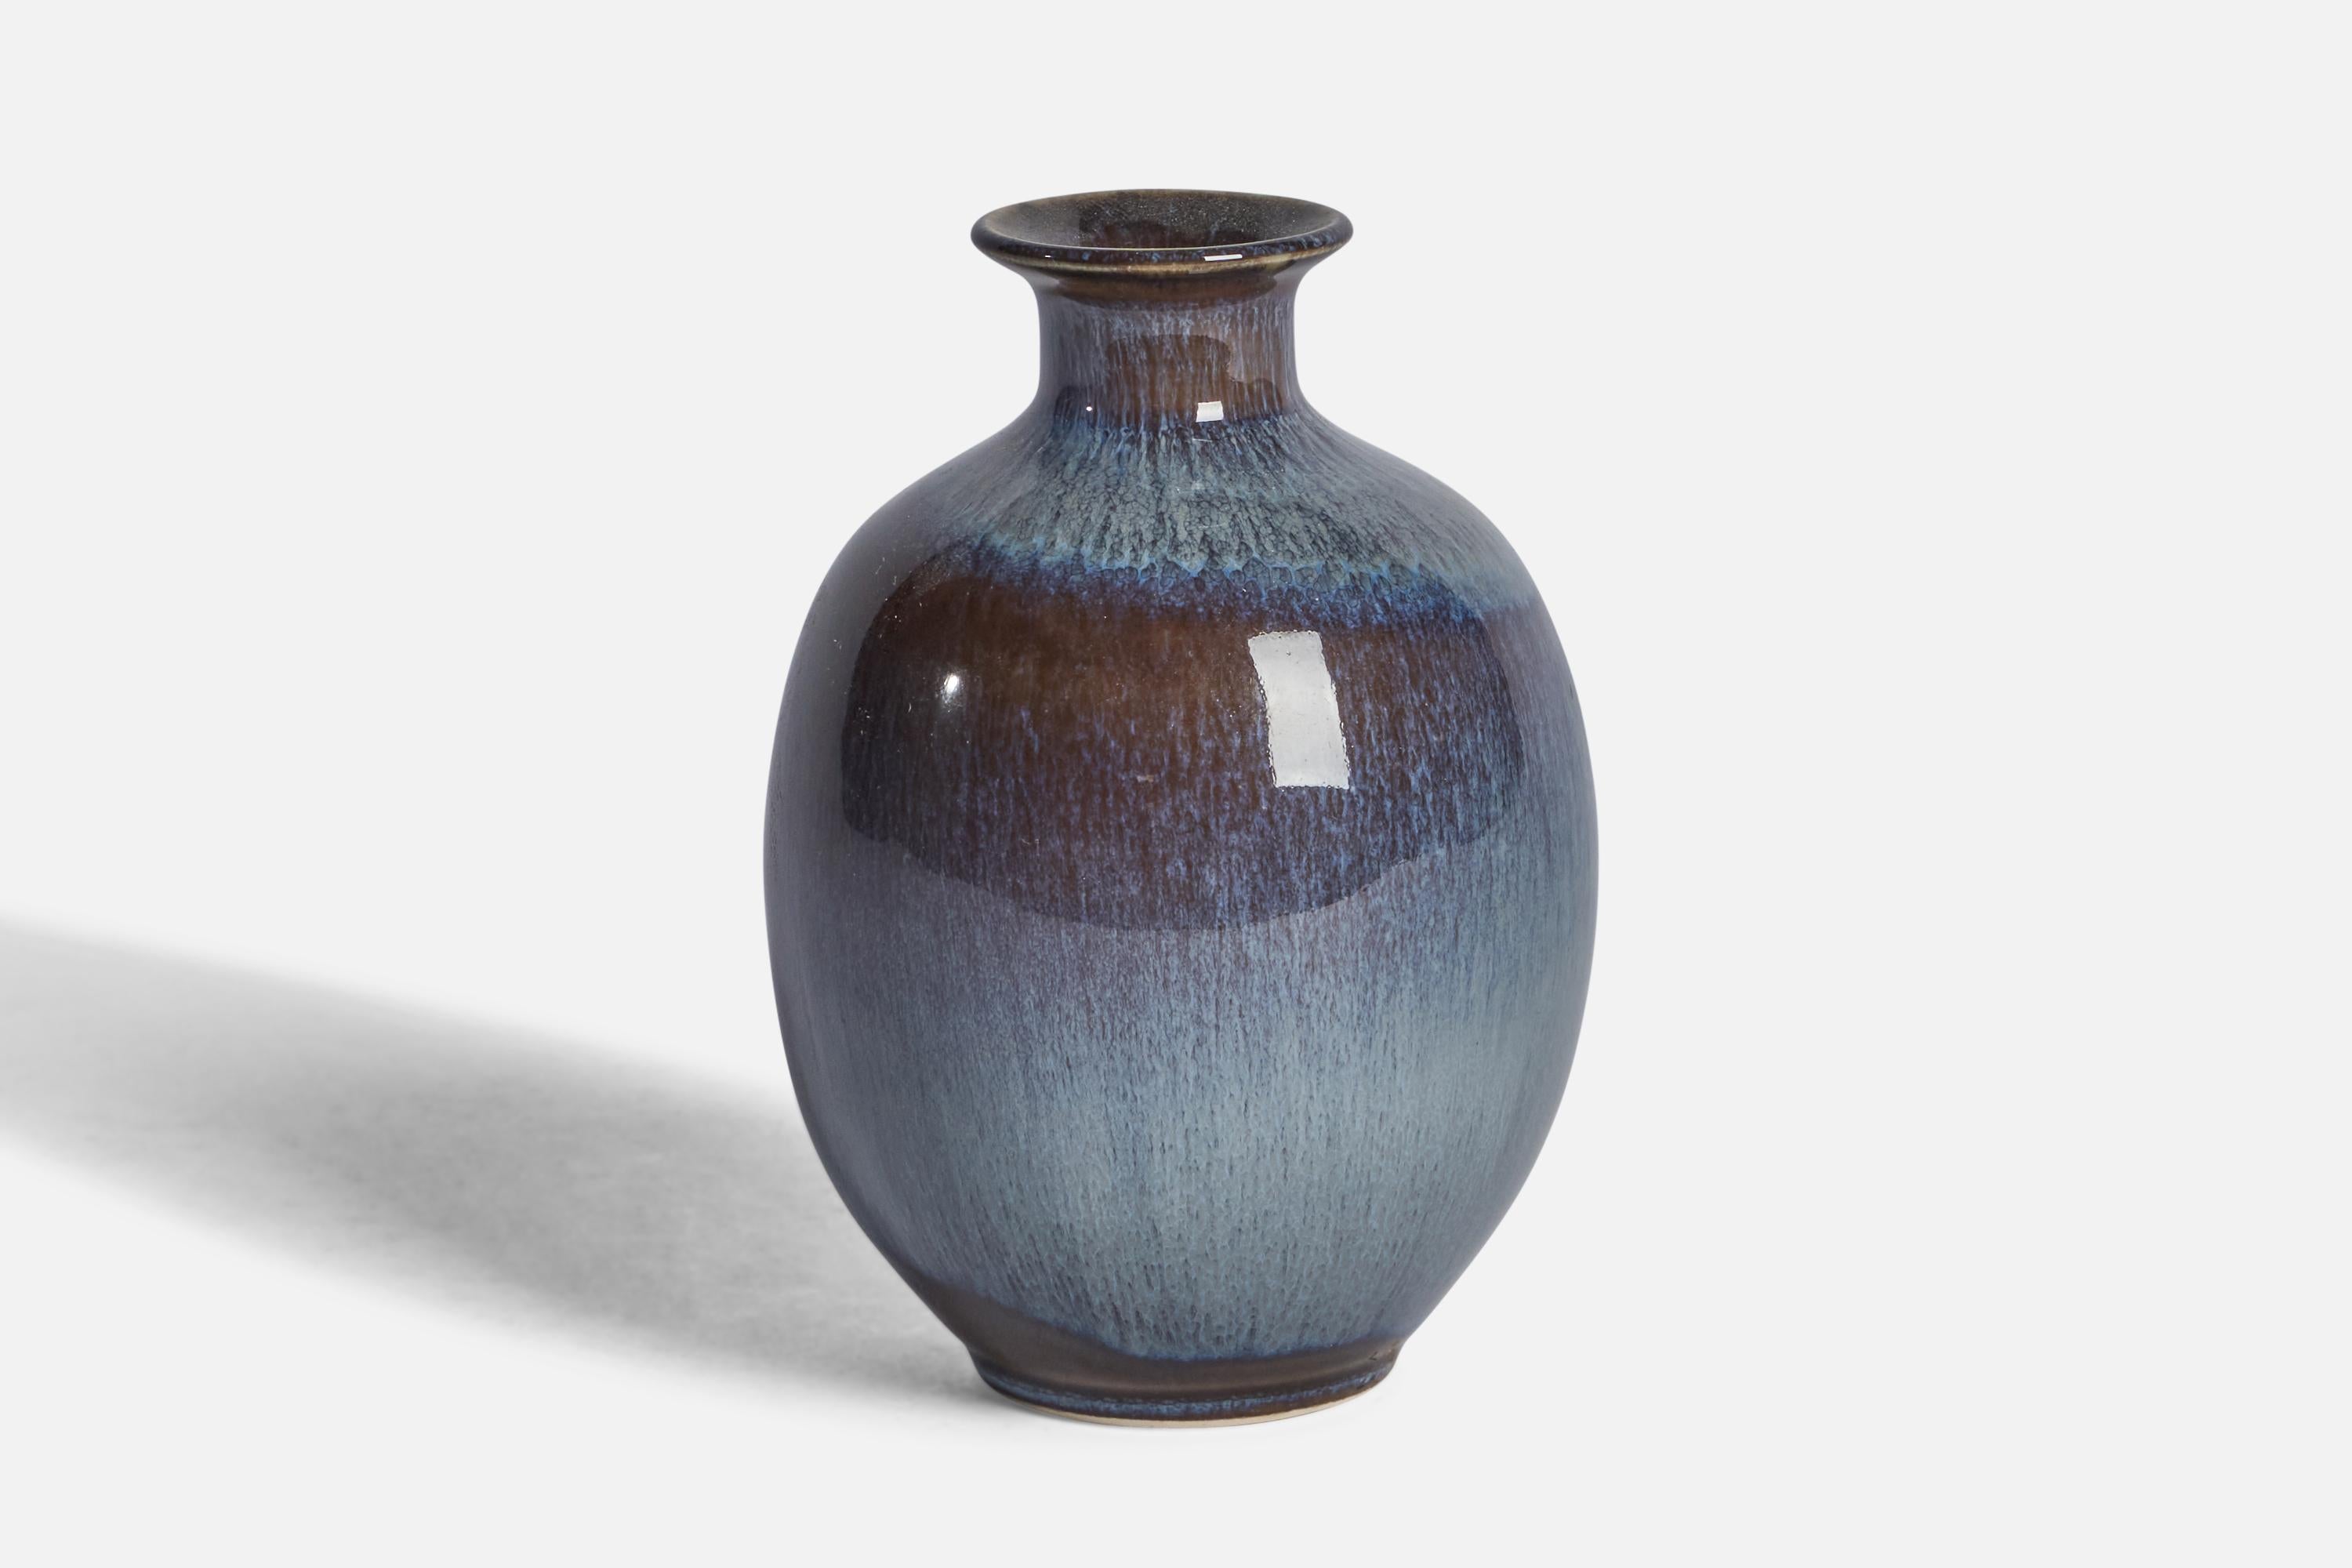 A blue-glazed stoneware vase designed and produced by Höganäs Keramik, Sweden, c. 1960s.